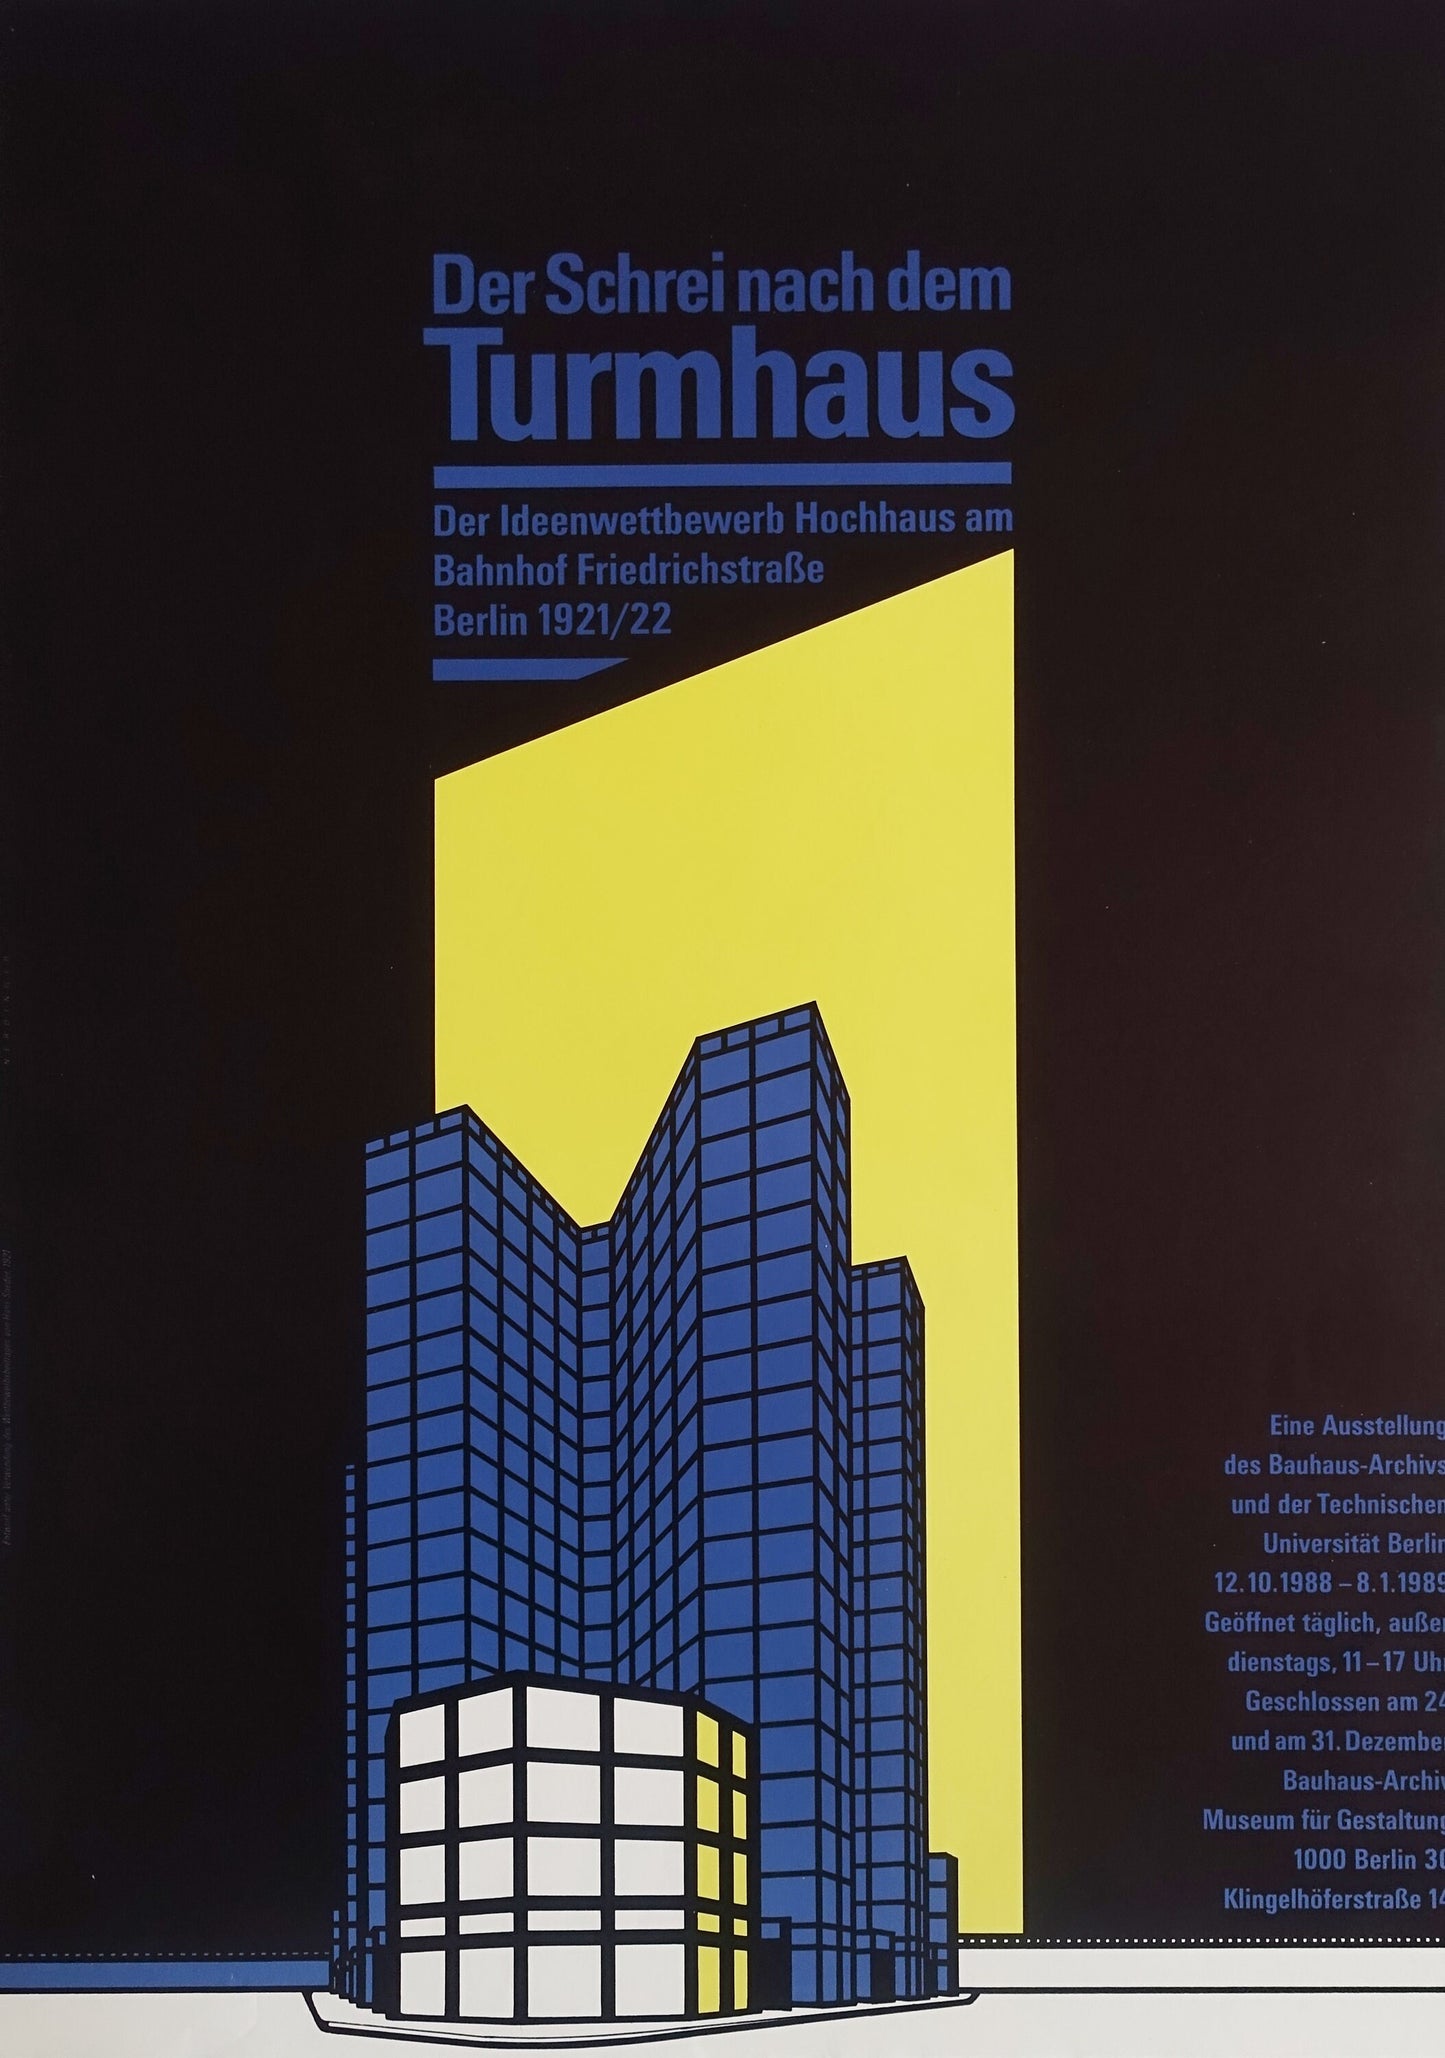 1988 Bauhaus Archiv Turmhaus Exhibition - Original Vintage Poster